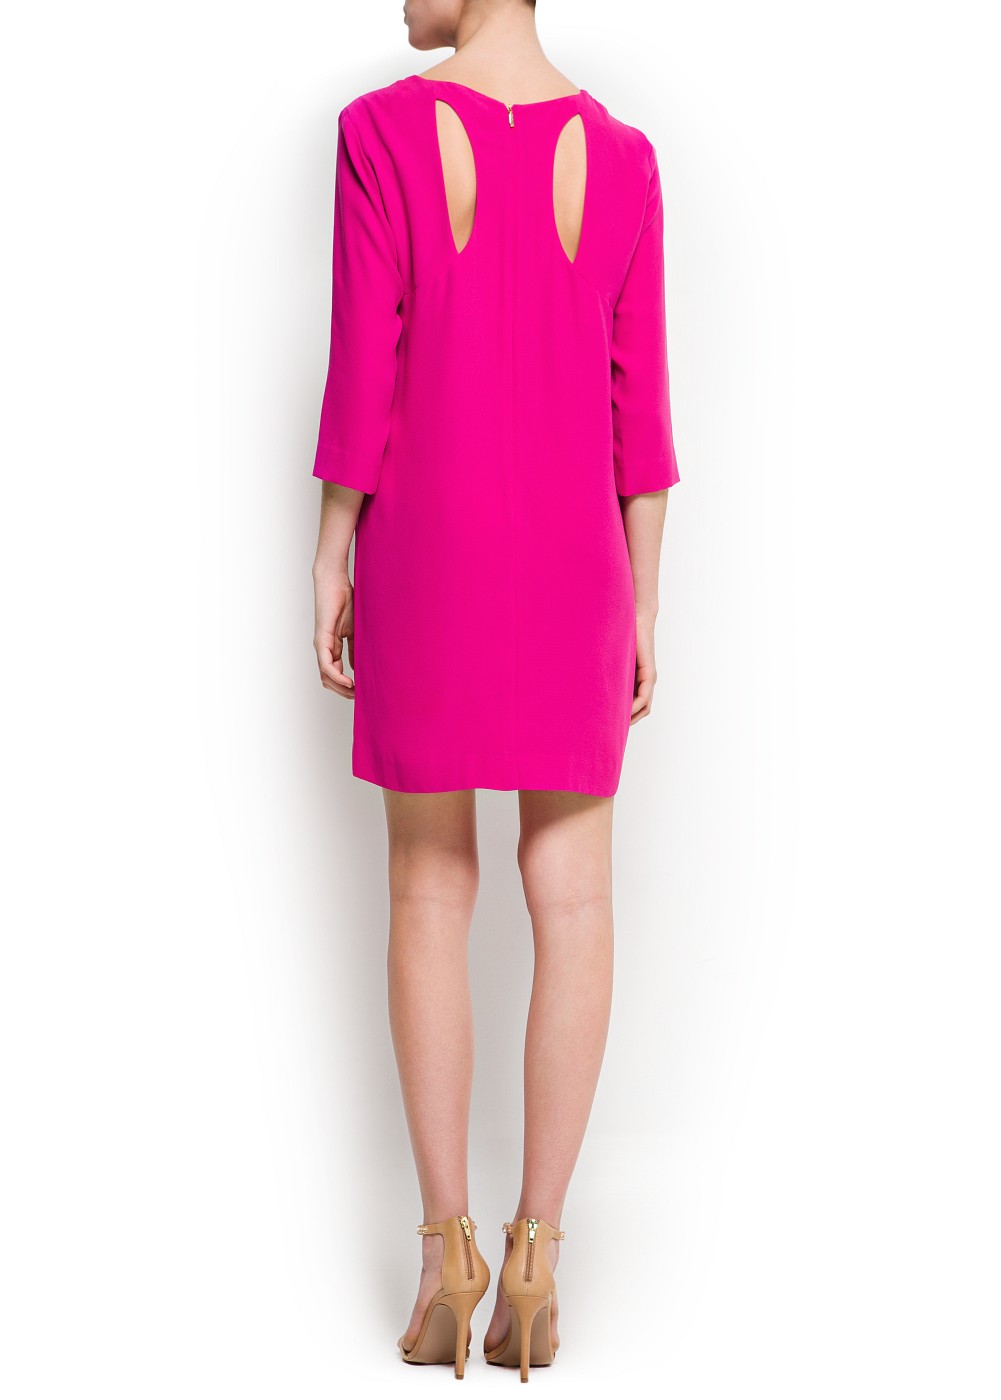 Mango Cutout Back Dress in Fuschia (Pink) - Lyst